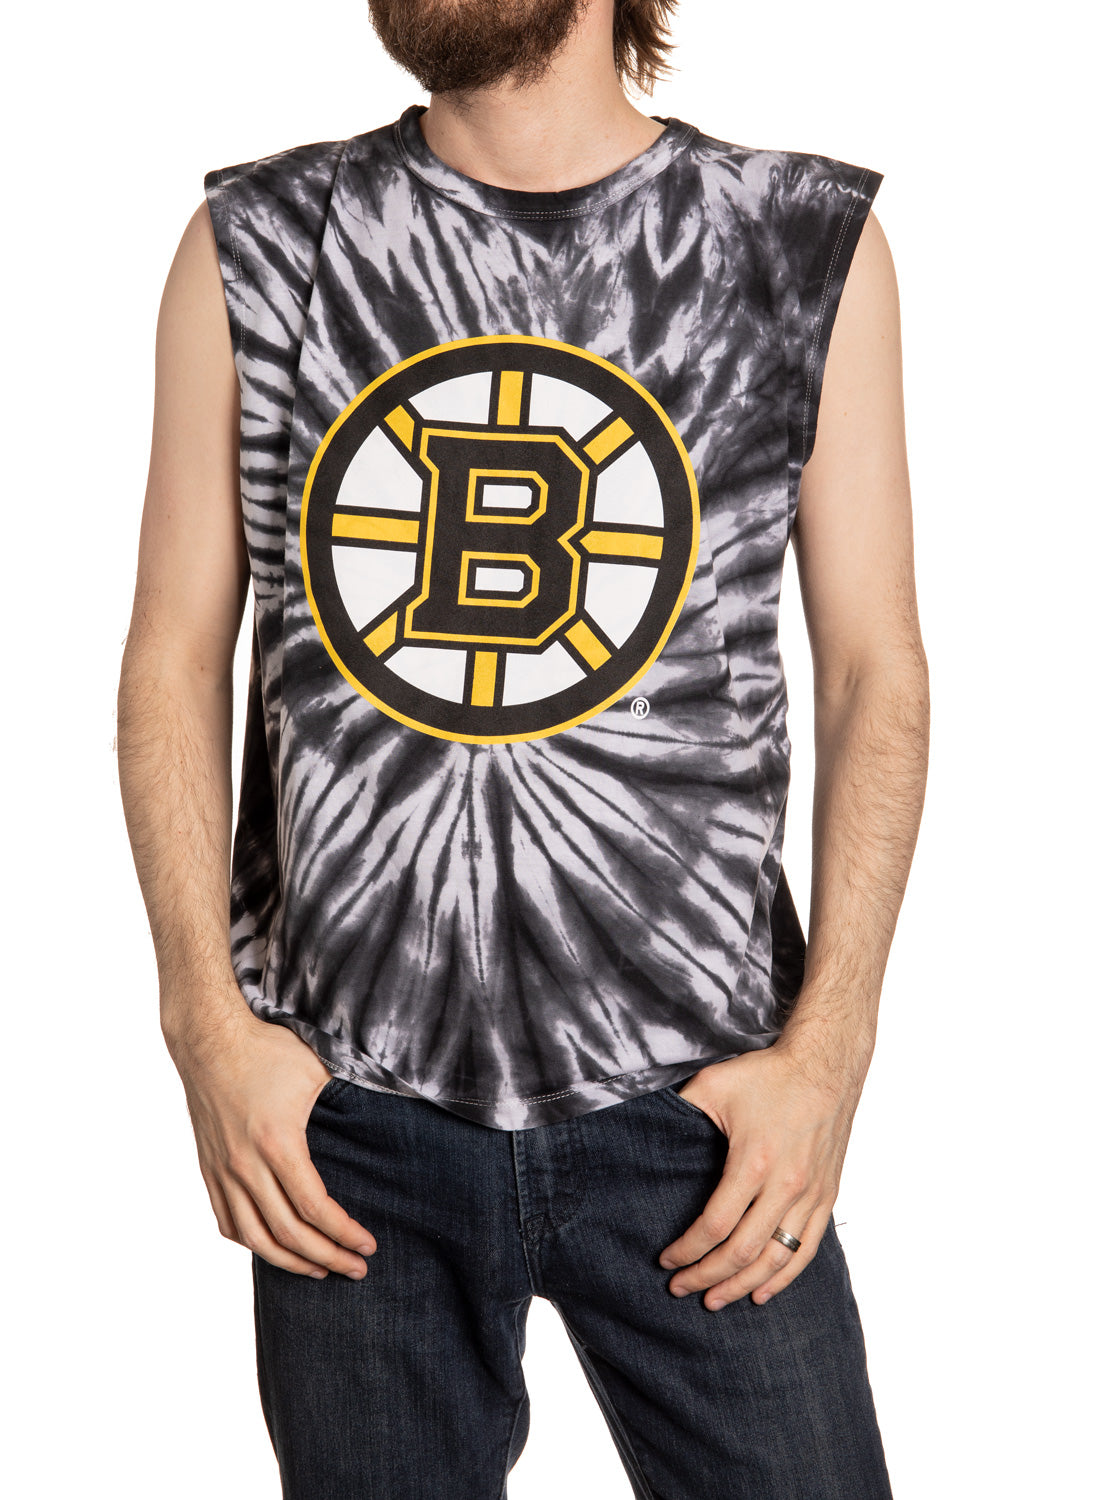 Boston Bruins Spiral Tie Dye Sleeveless Shirt Front View